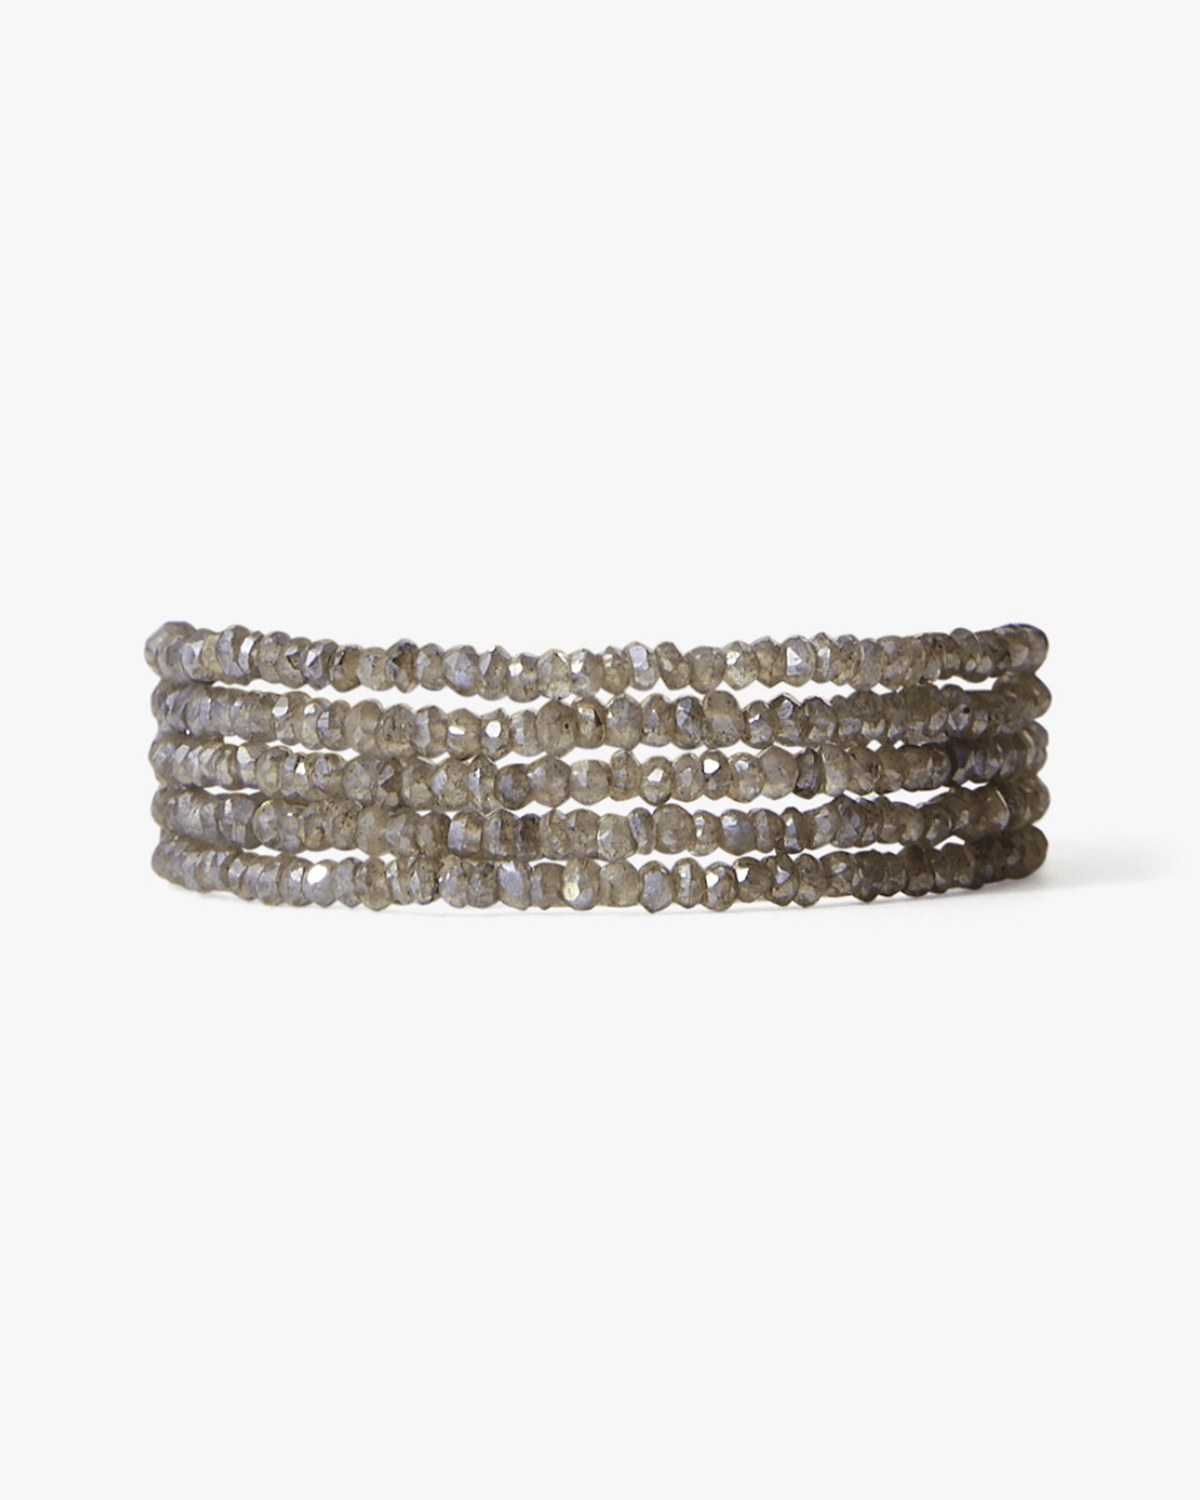 Chan Luu Jewelry Labradorite/SS Naked Wrap Bracelet in Mystic Labradorite w/ SS